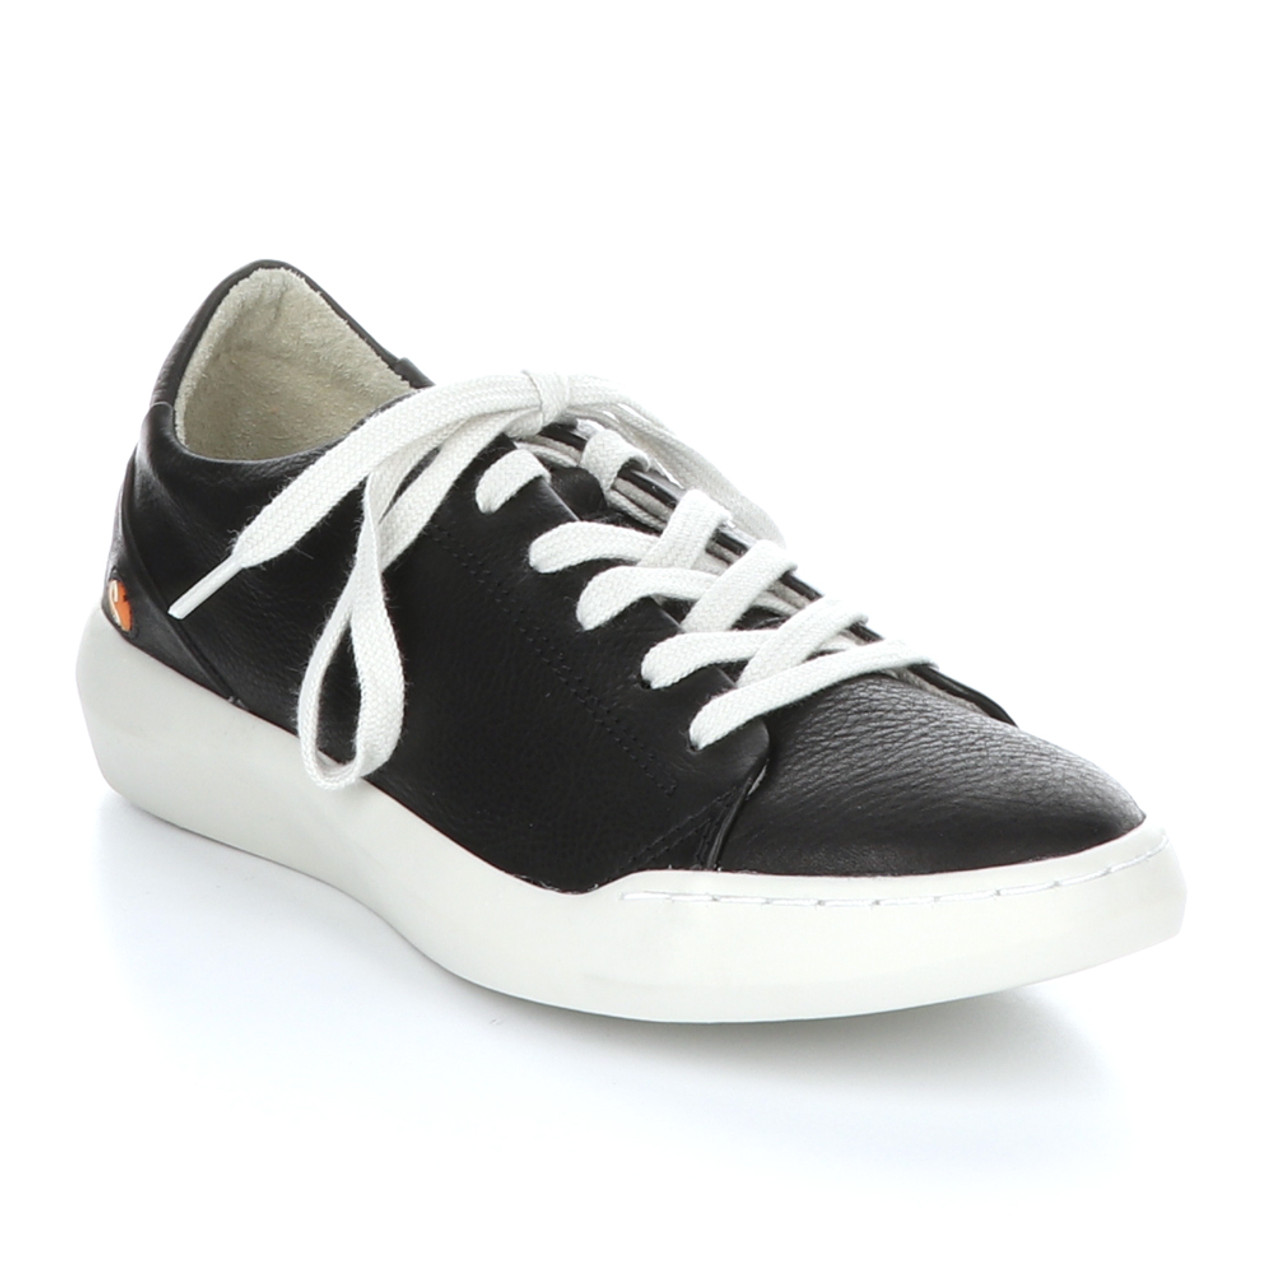 Women's 535 Sneaker - Black | Discount Softinos Ladies & More Shoolu.com | Shoolu.com